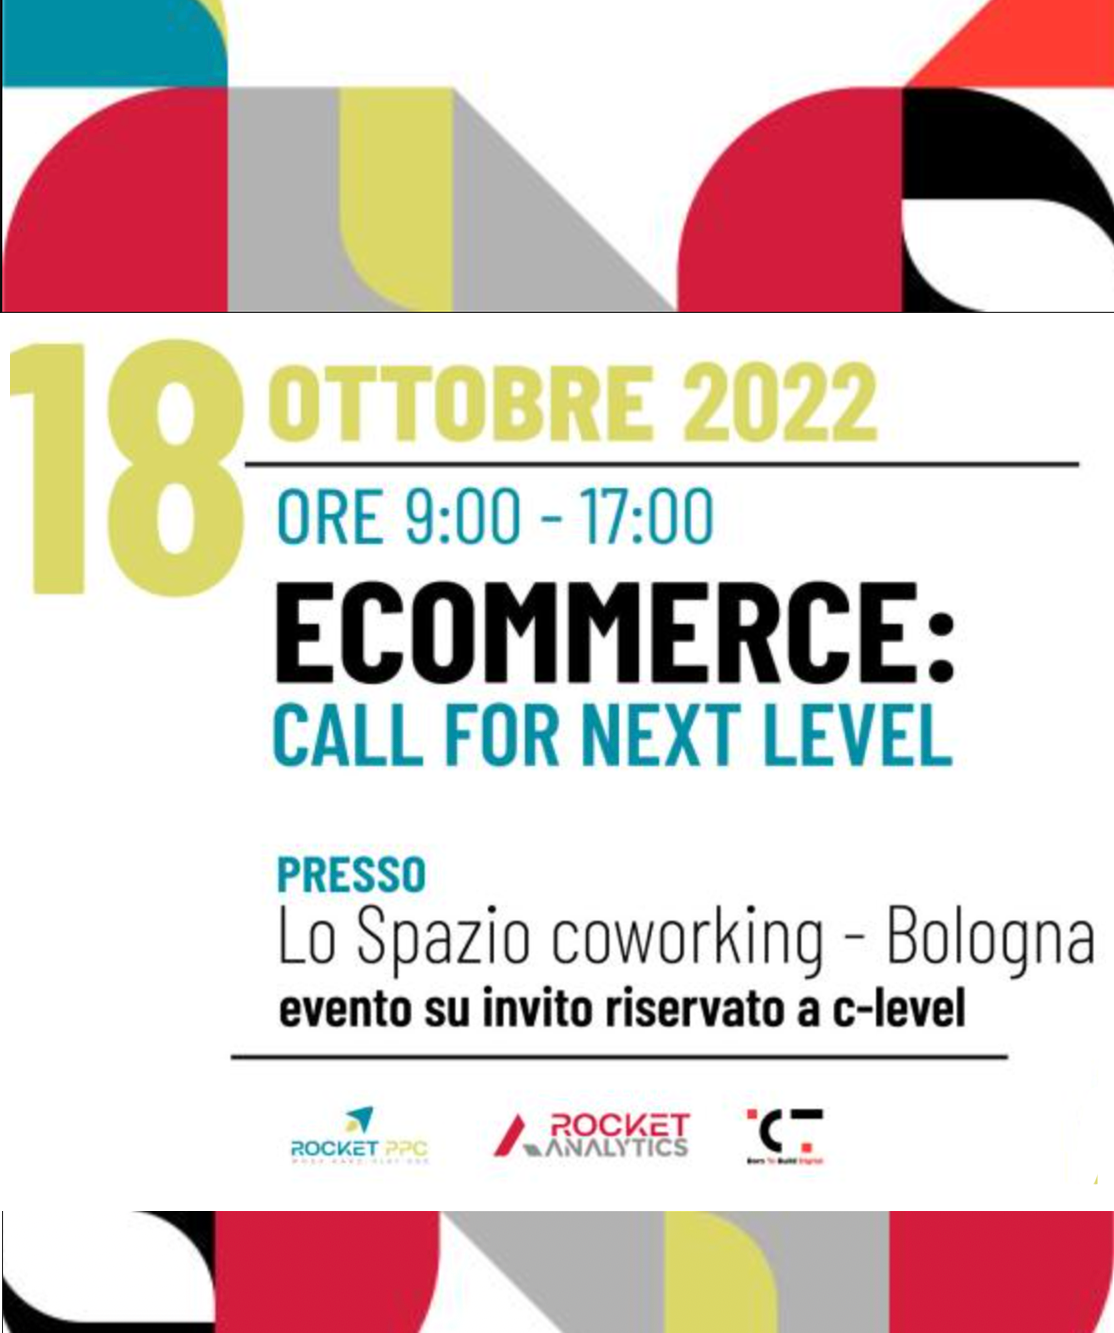 call for the xnext level ecommerce bologna 18 ottobre